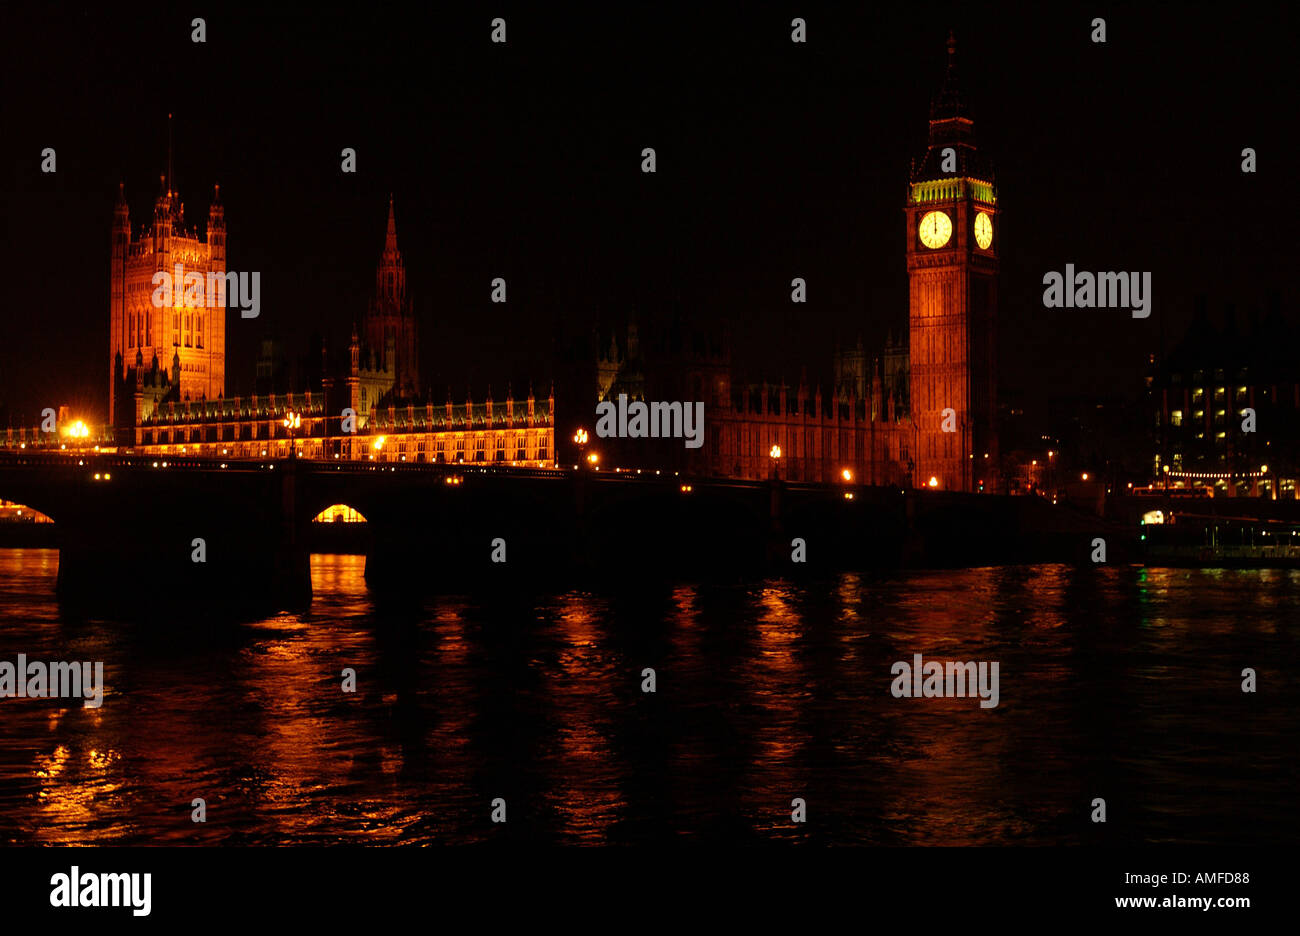 Big Ben Houses of Parliament London England Banque D'Images